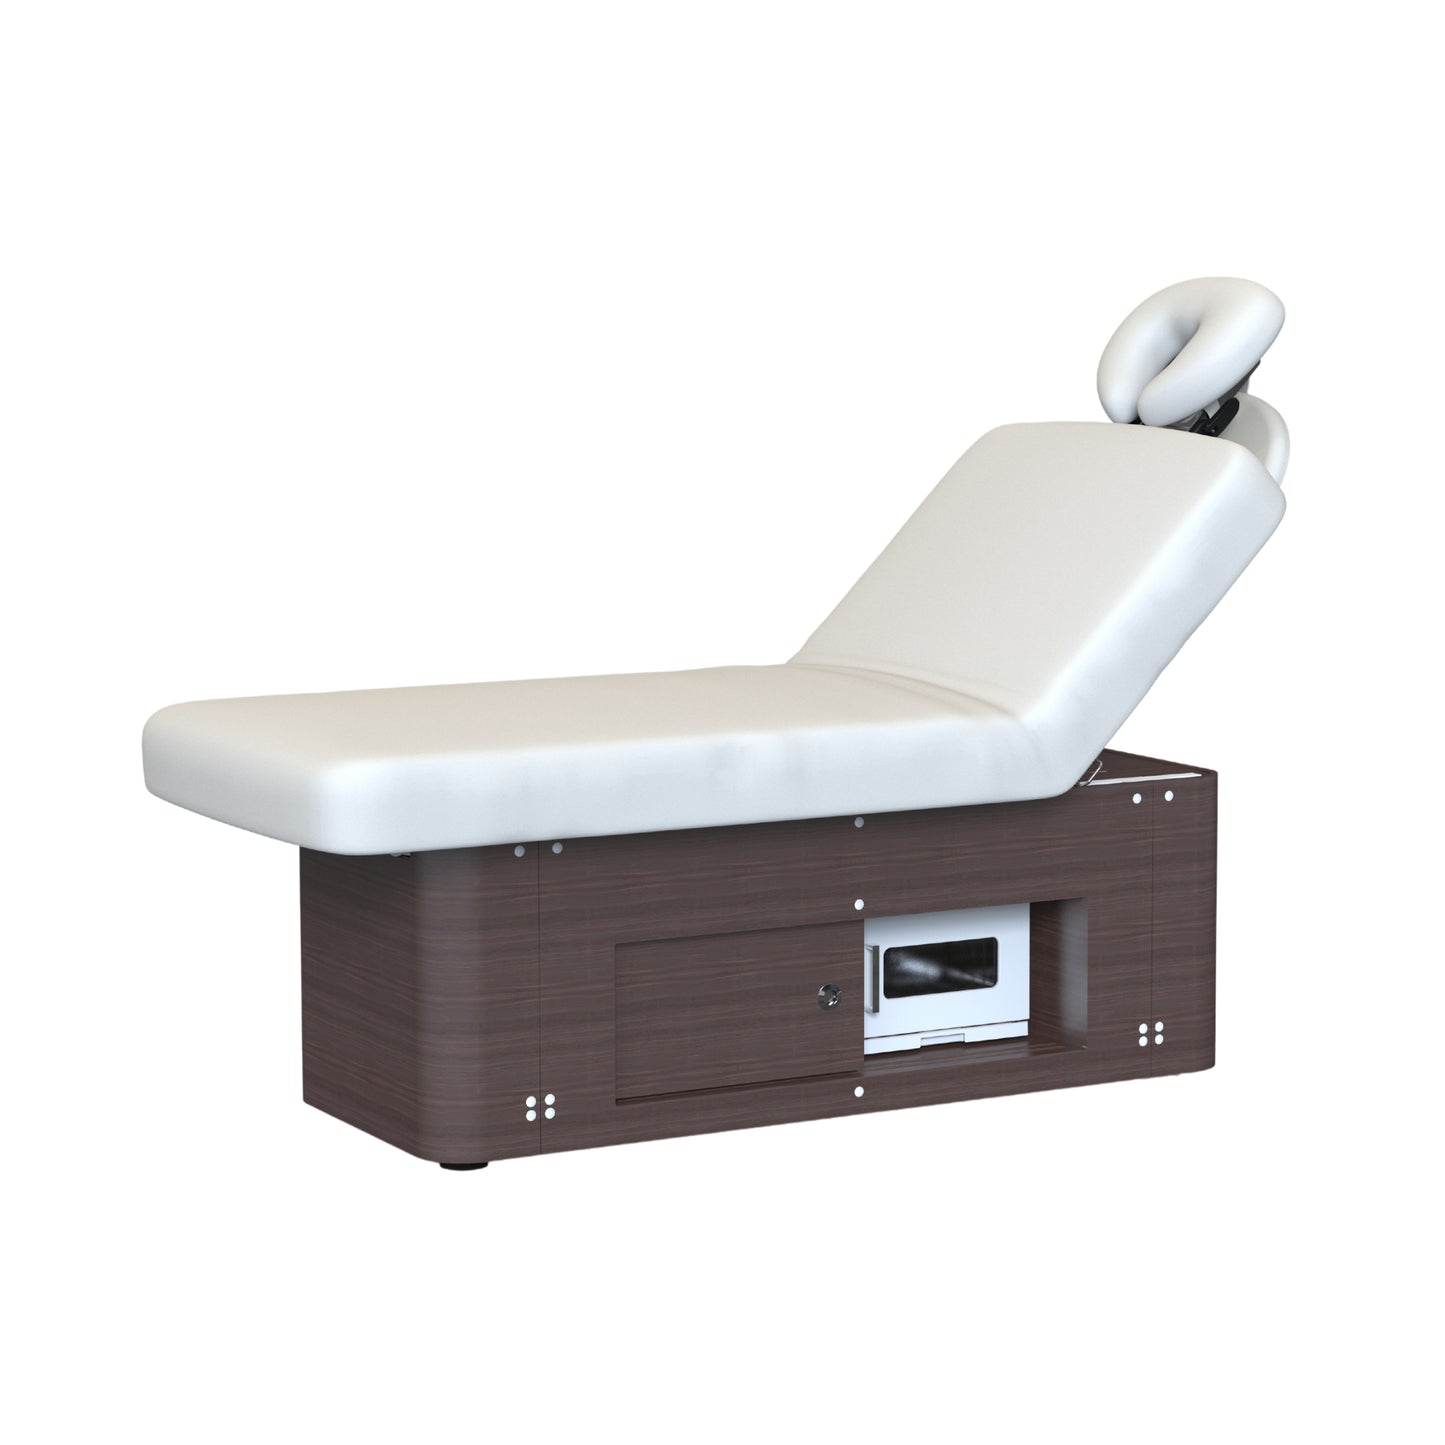 SoftSerene Massage Table - Silverfox 2285 - Sitting Position 1